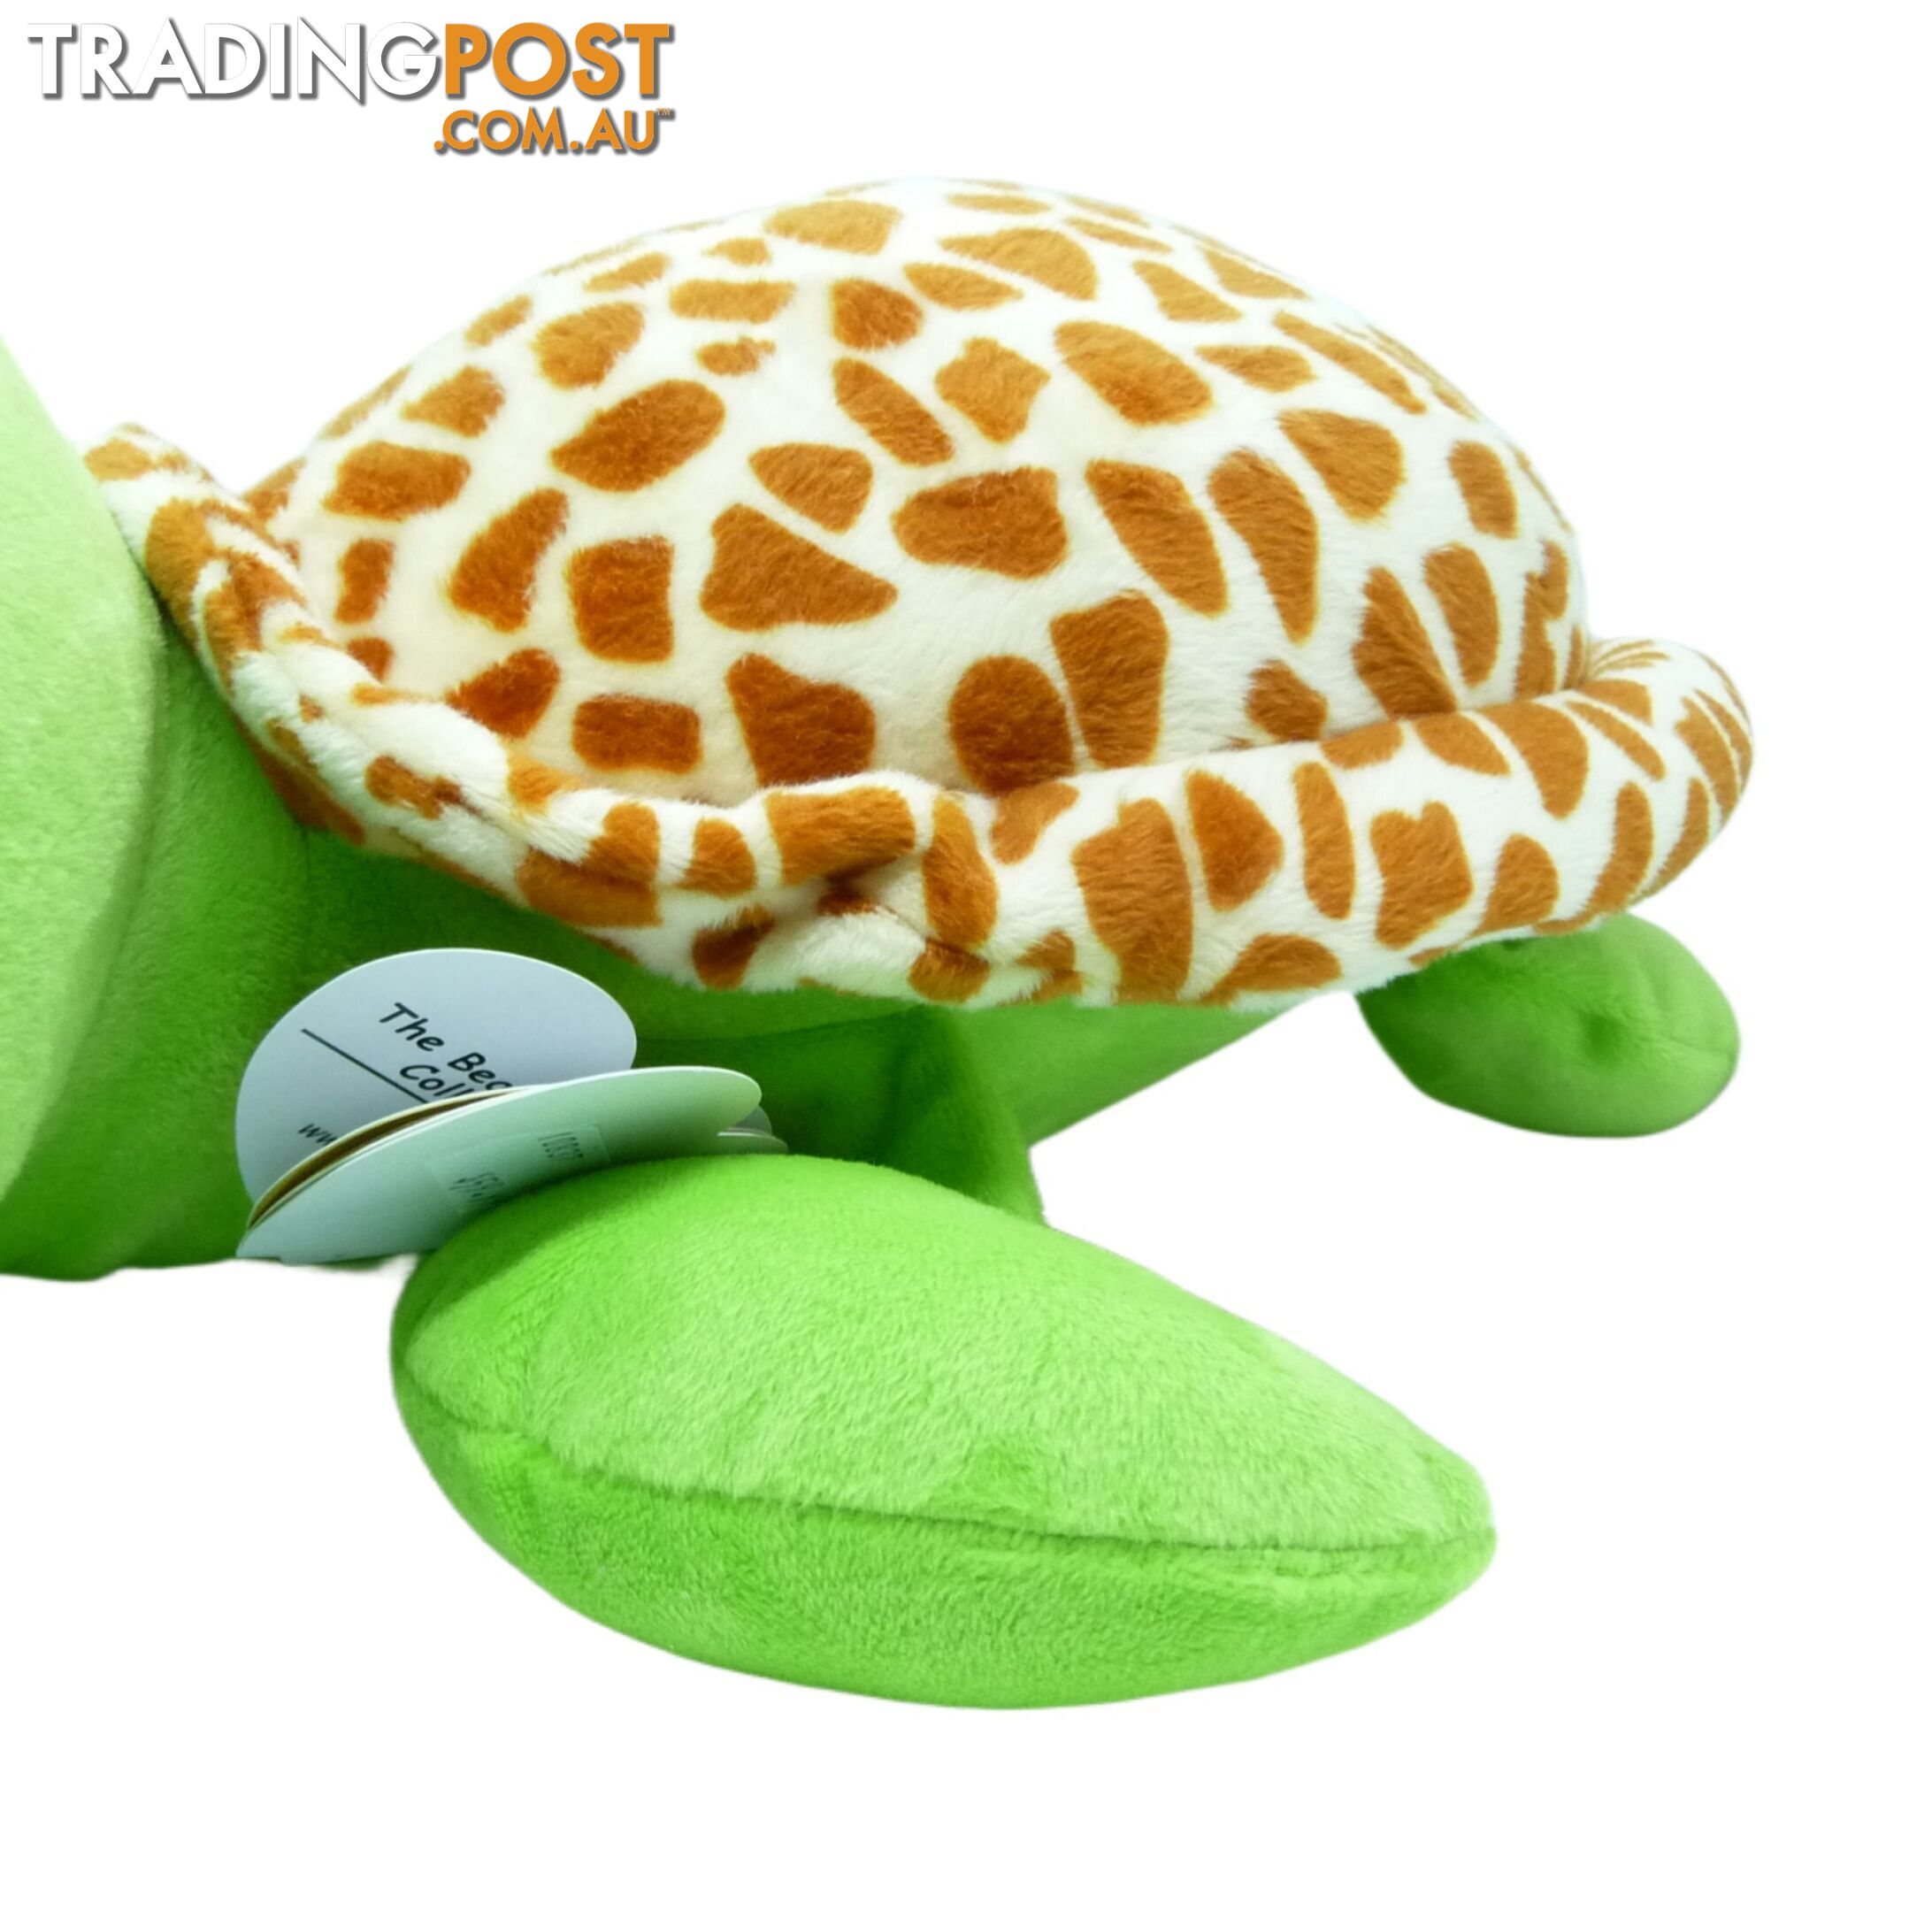 Ty Beanie Boos - Zippy The Turtle Green Large 41cm - Bg36809 - 008421368099